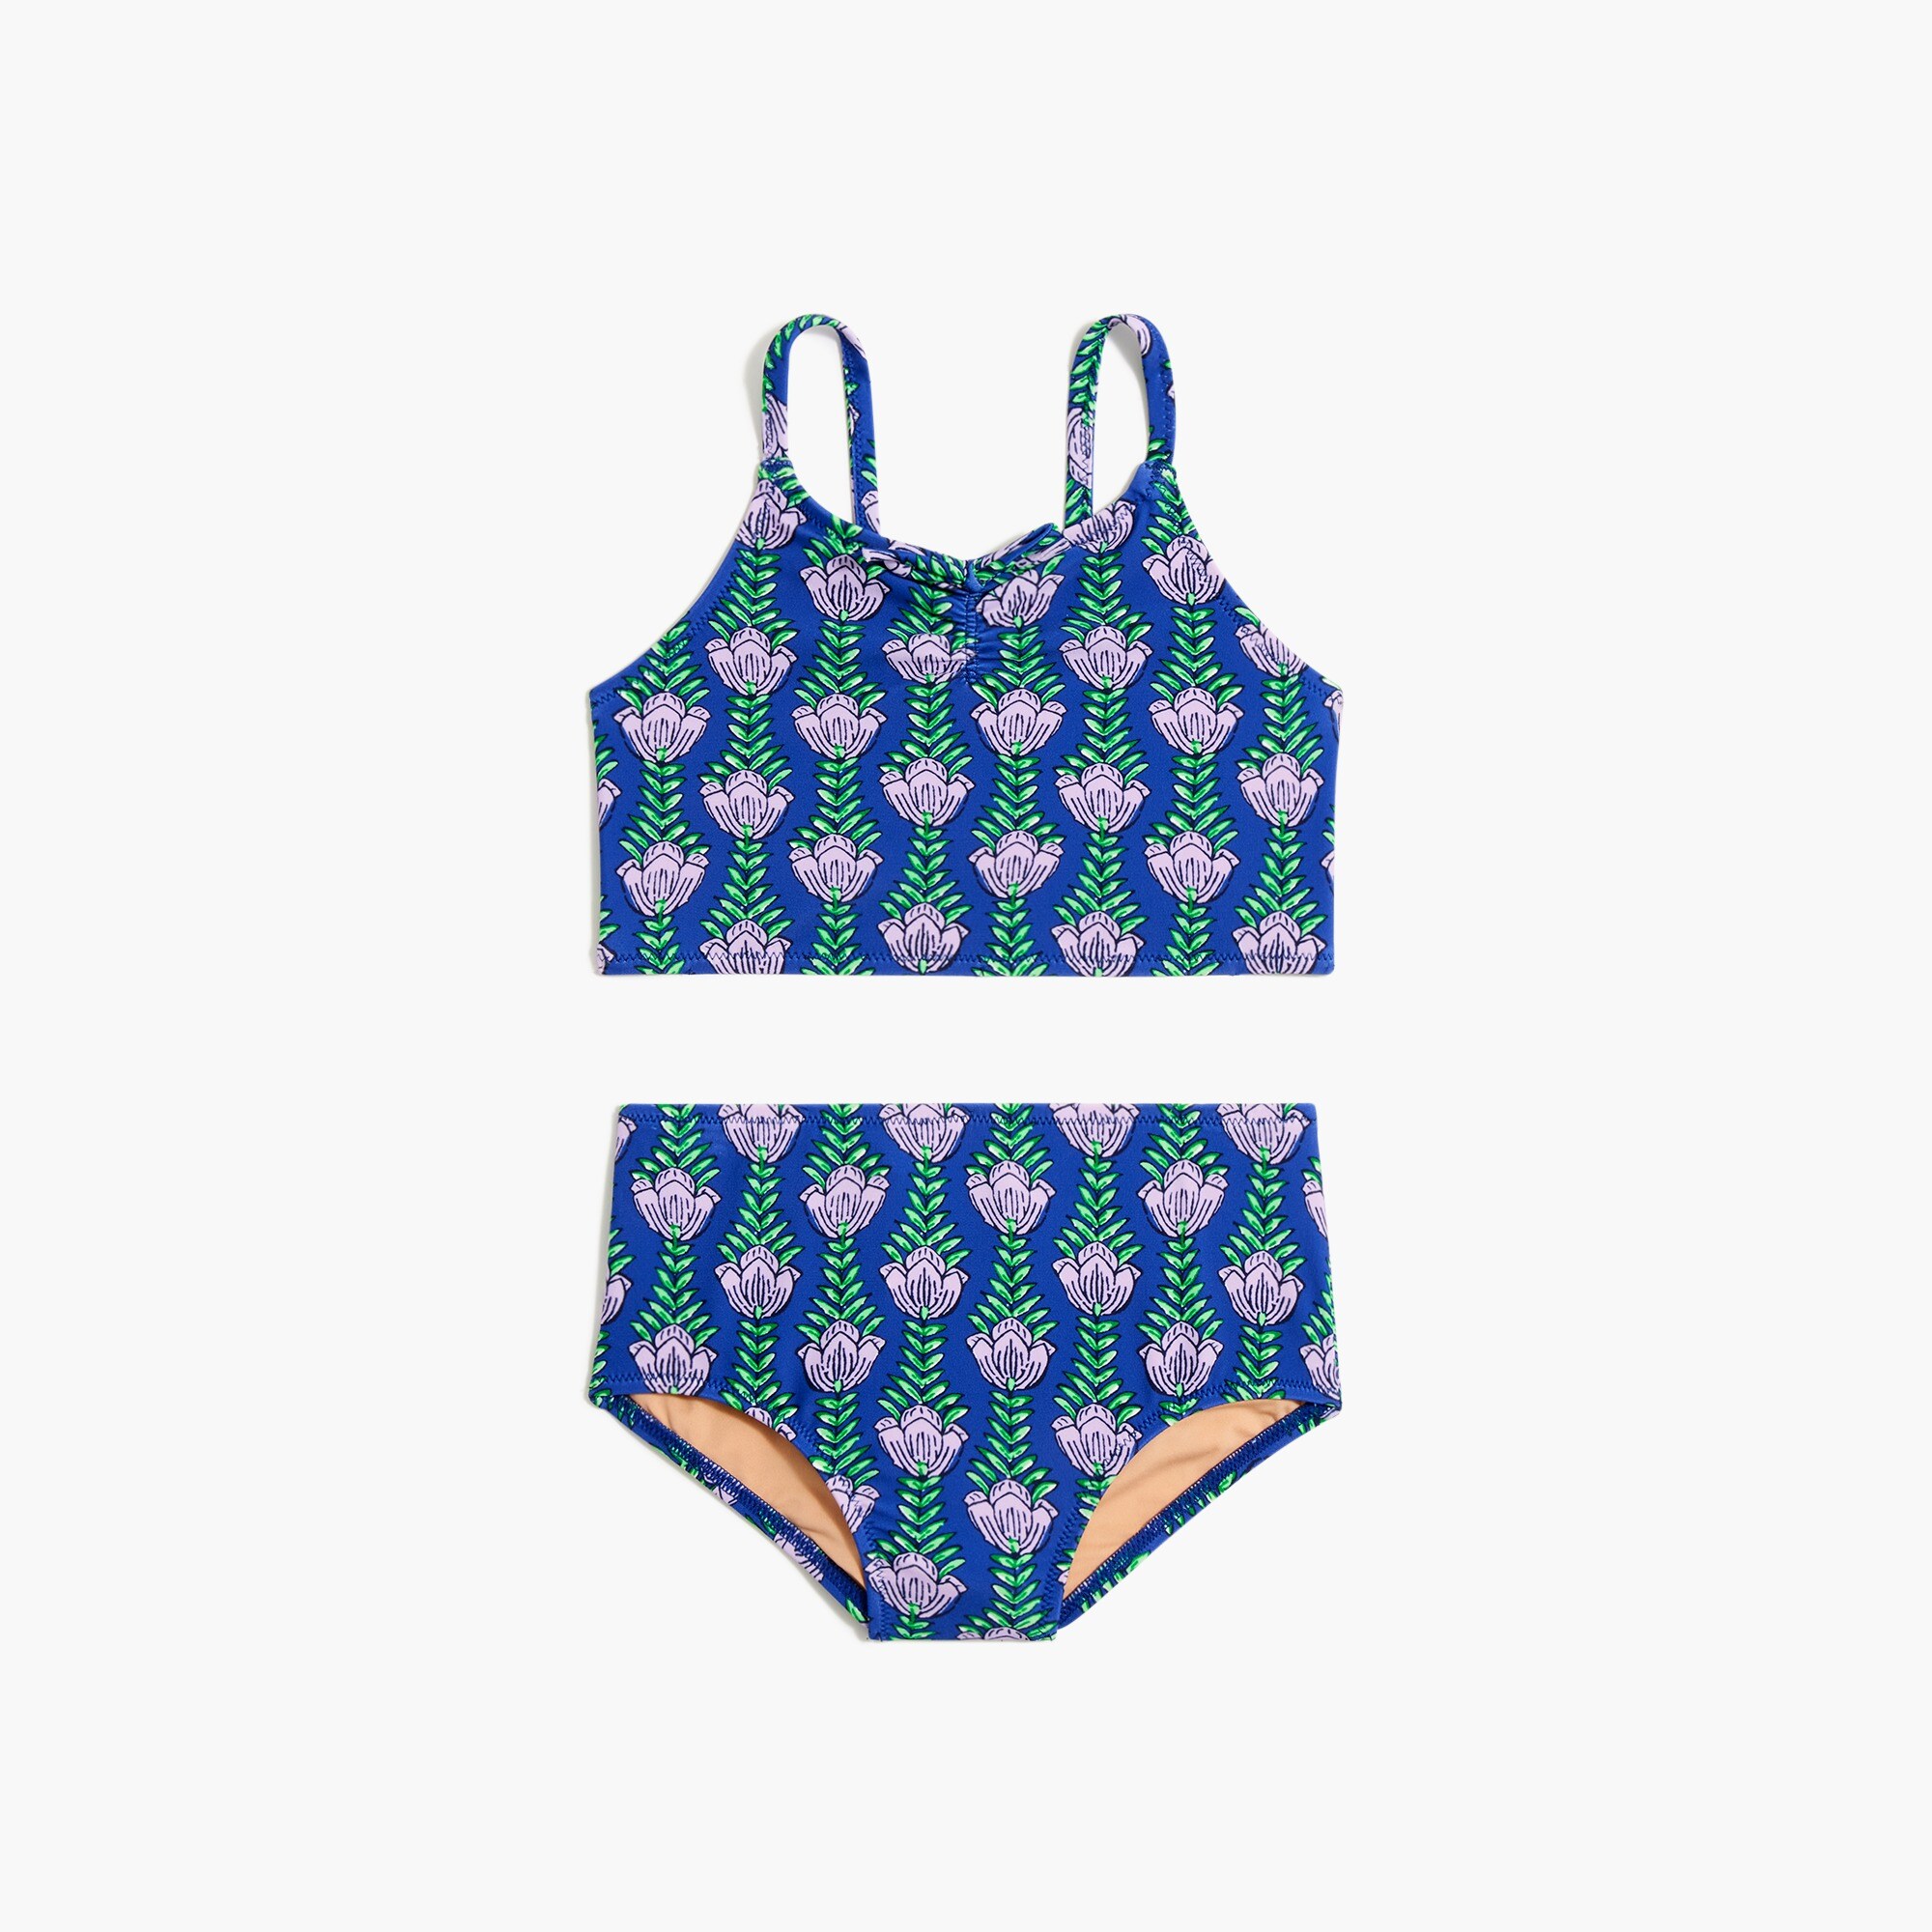  Girls' printed bow bikini set